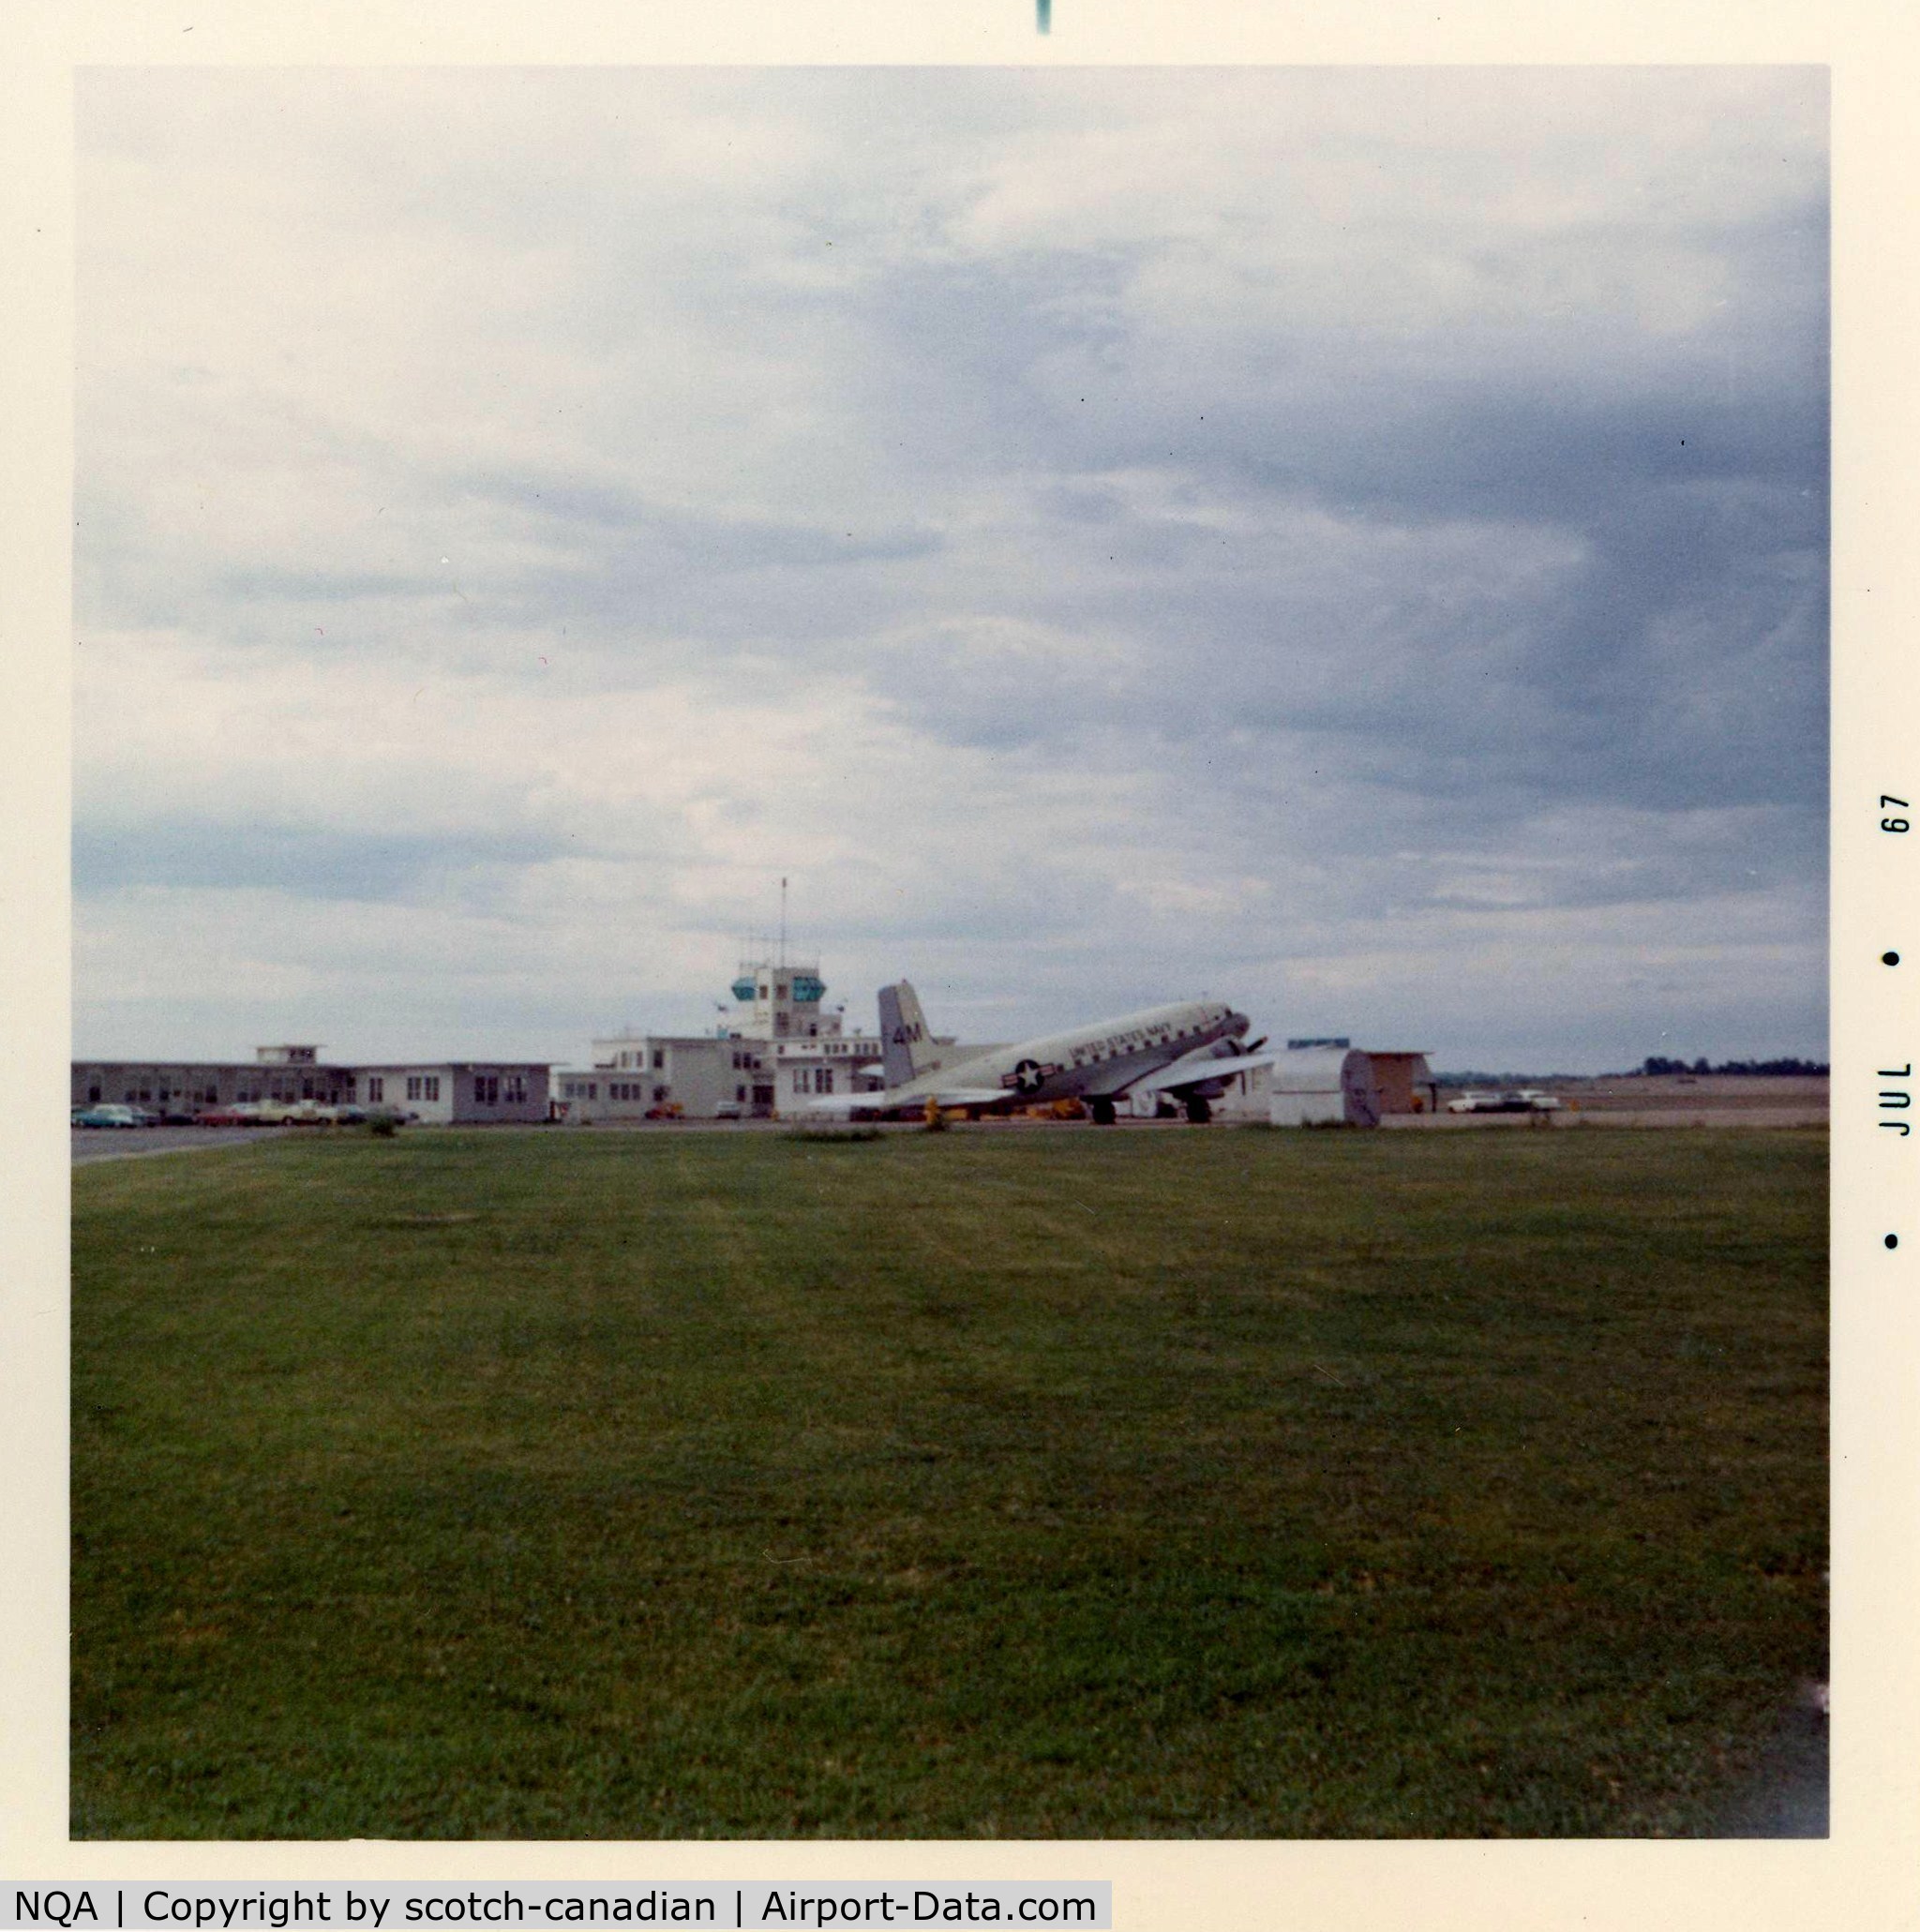 Millington Regional Jetport Airport (NQA) - Operations Building, Control Tower and R4D Aircraft at Naval Air Station - Memphis, Millington, TN - 1967